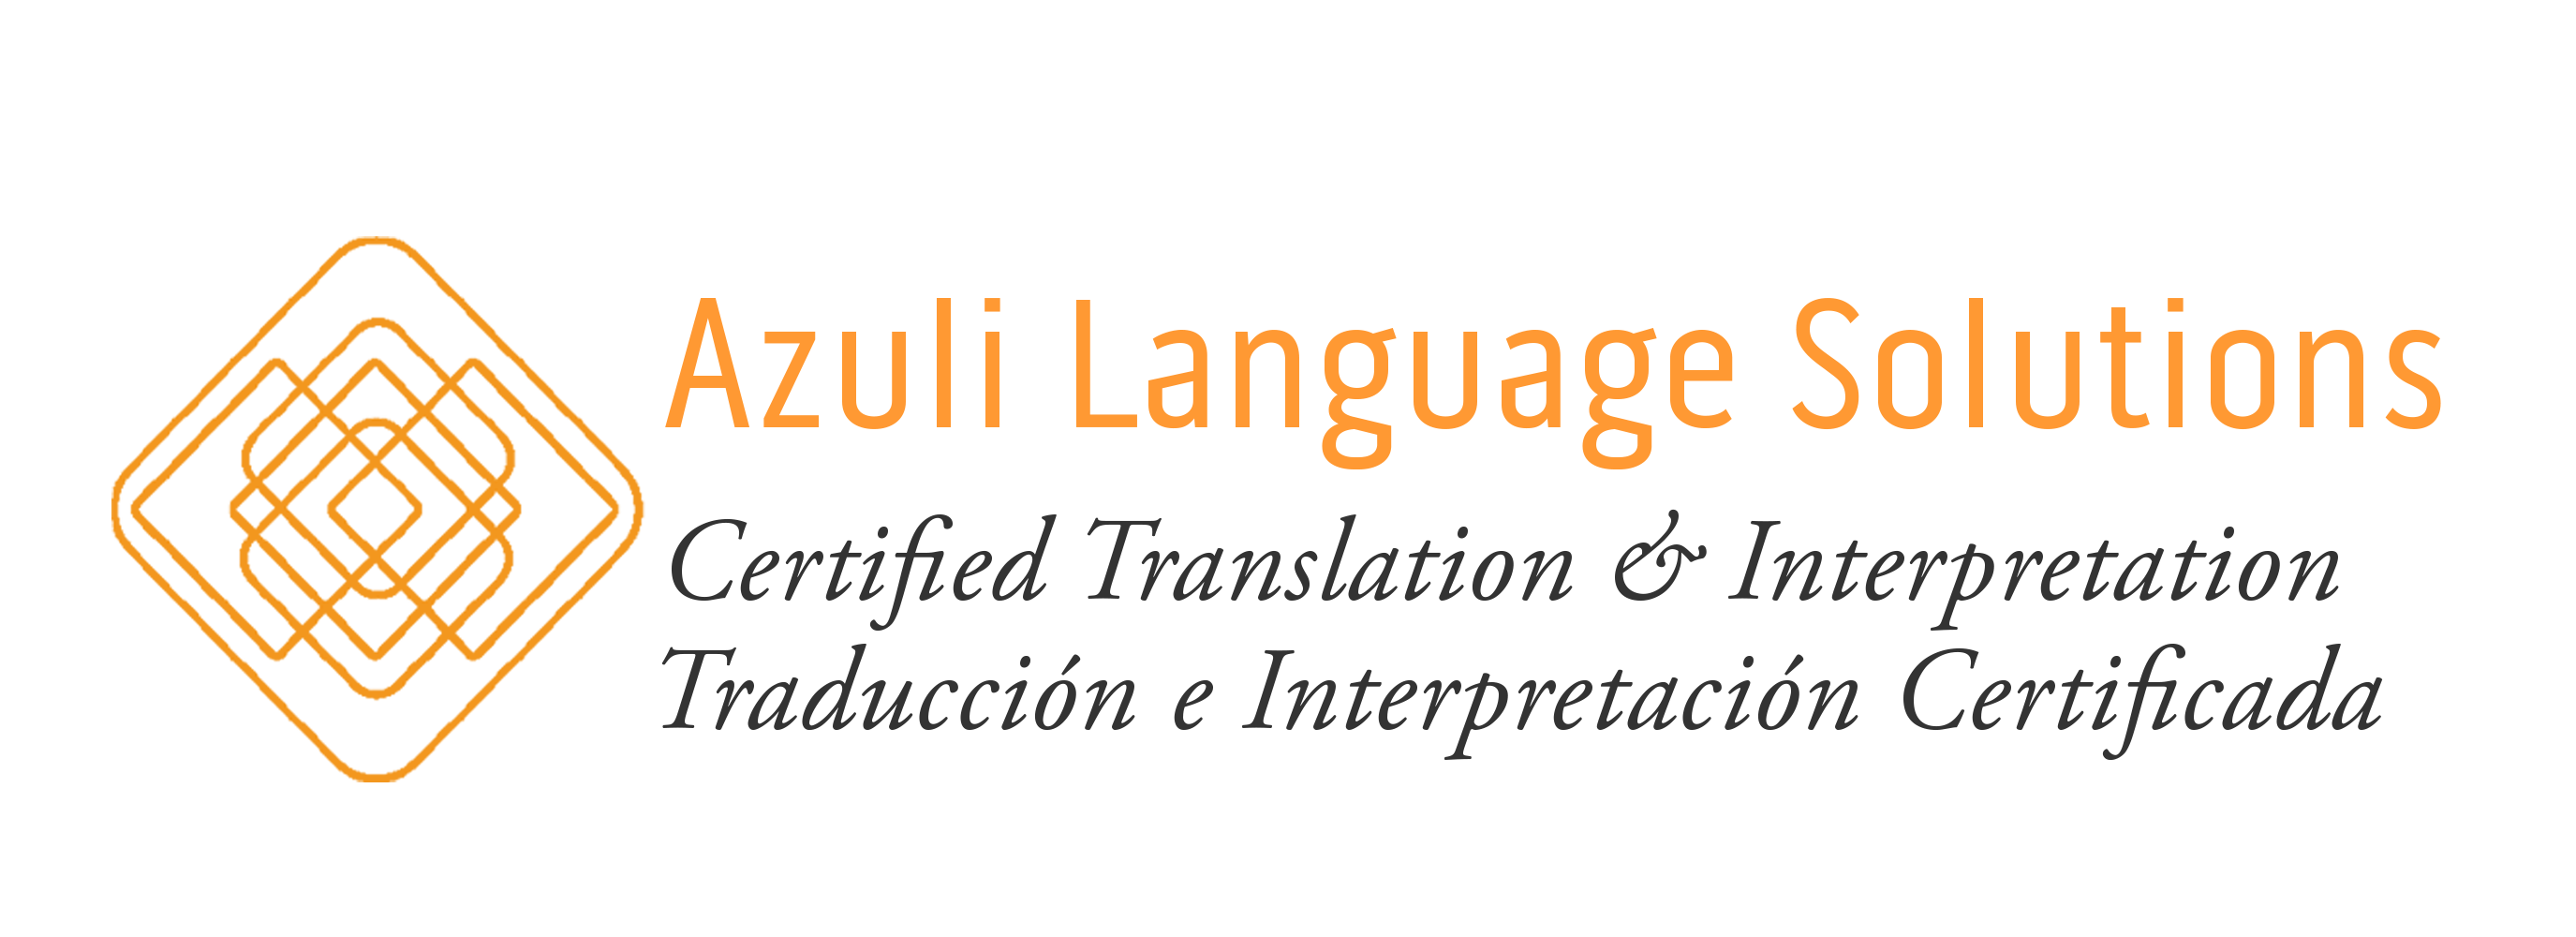 Azuli Language Solutions logo